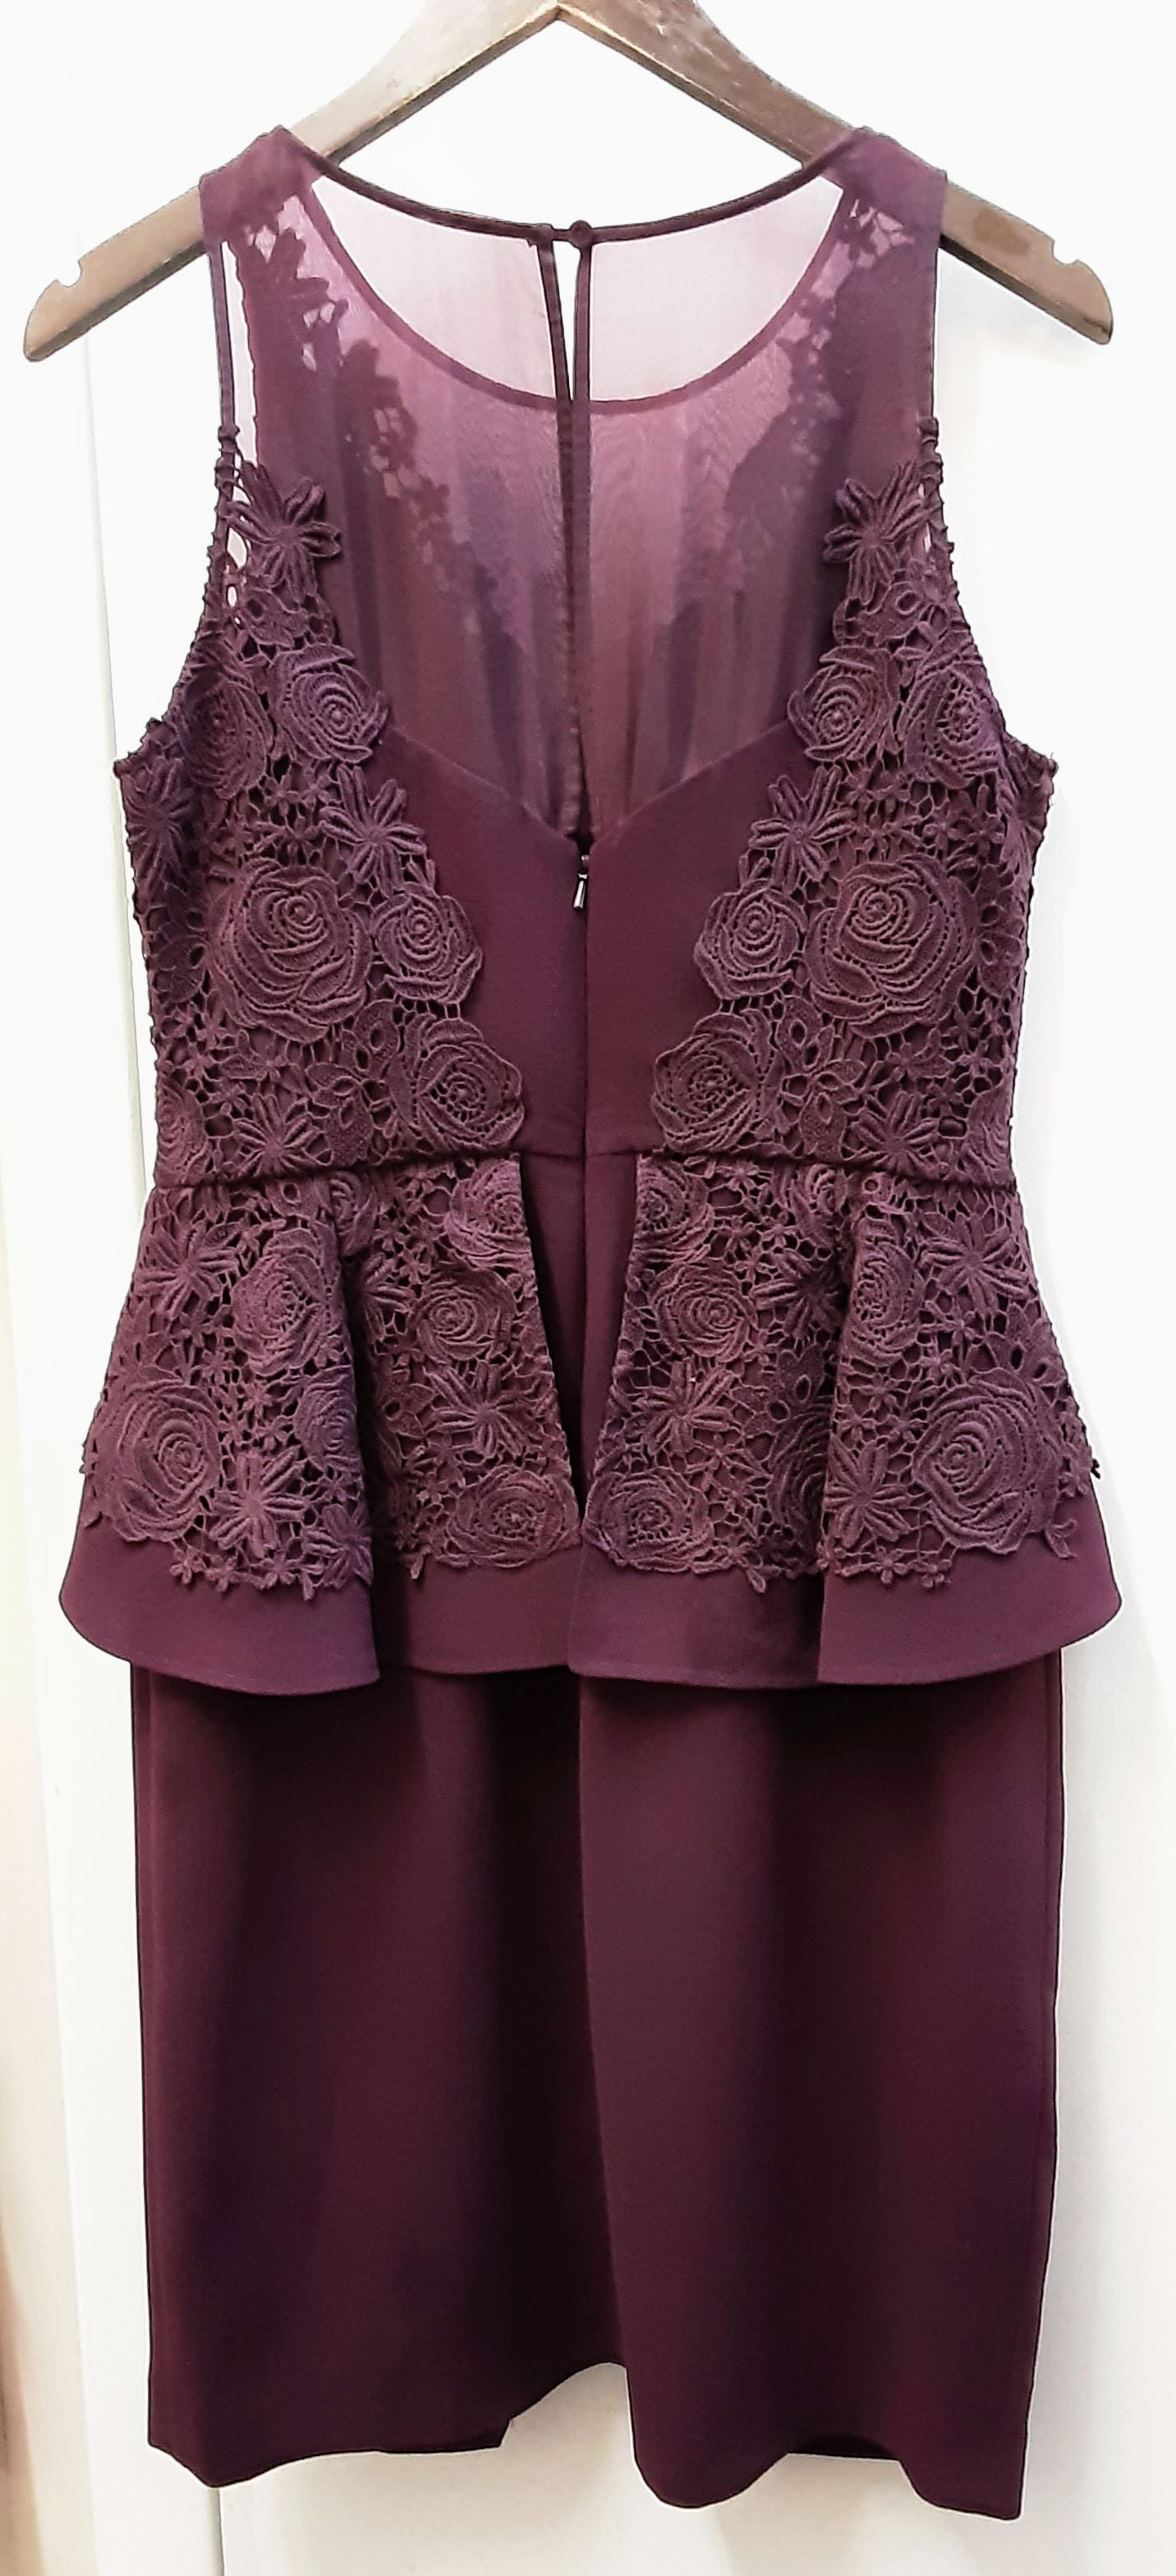 COAST Maroon Dress w/Lace Peplum Detail Size 12